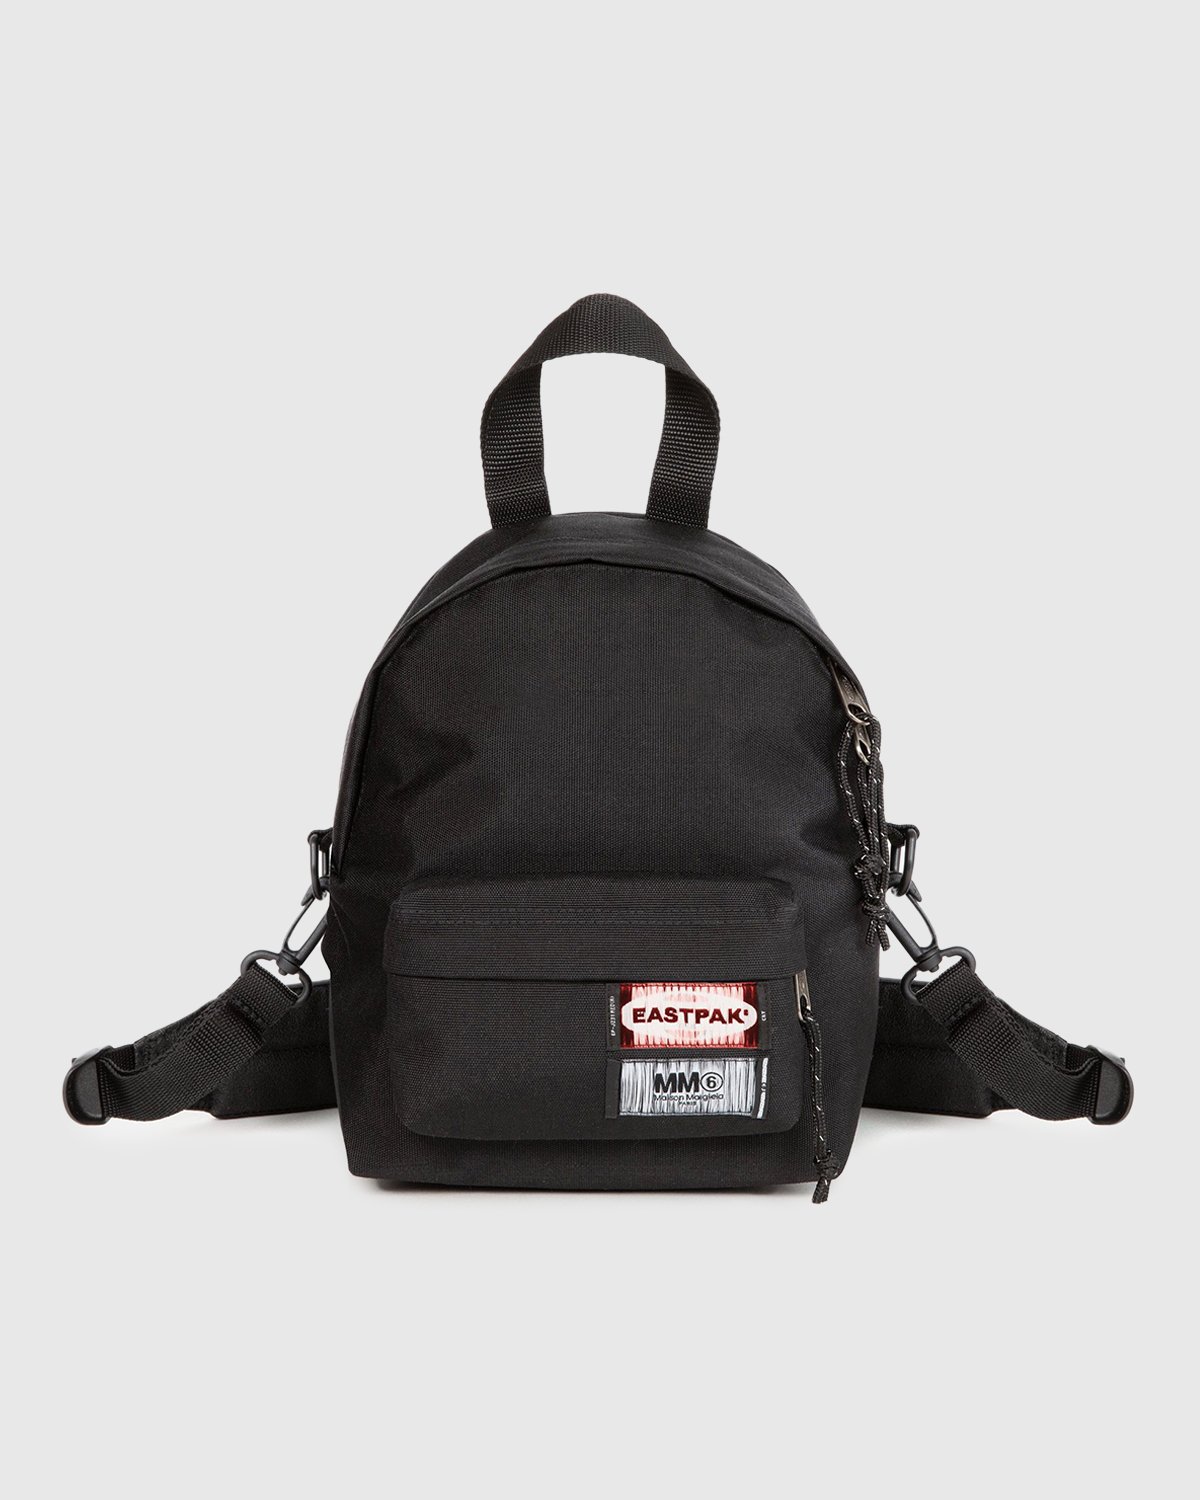 MM6 Maison Margiela x Eastpak - Shoulder Bag Black - Accessories - Black - Image 1